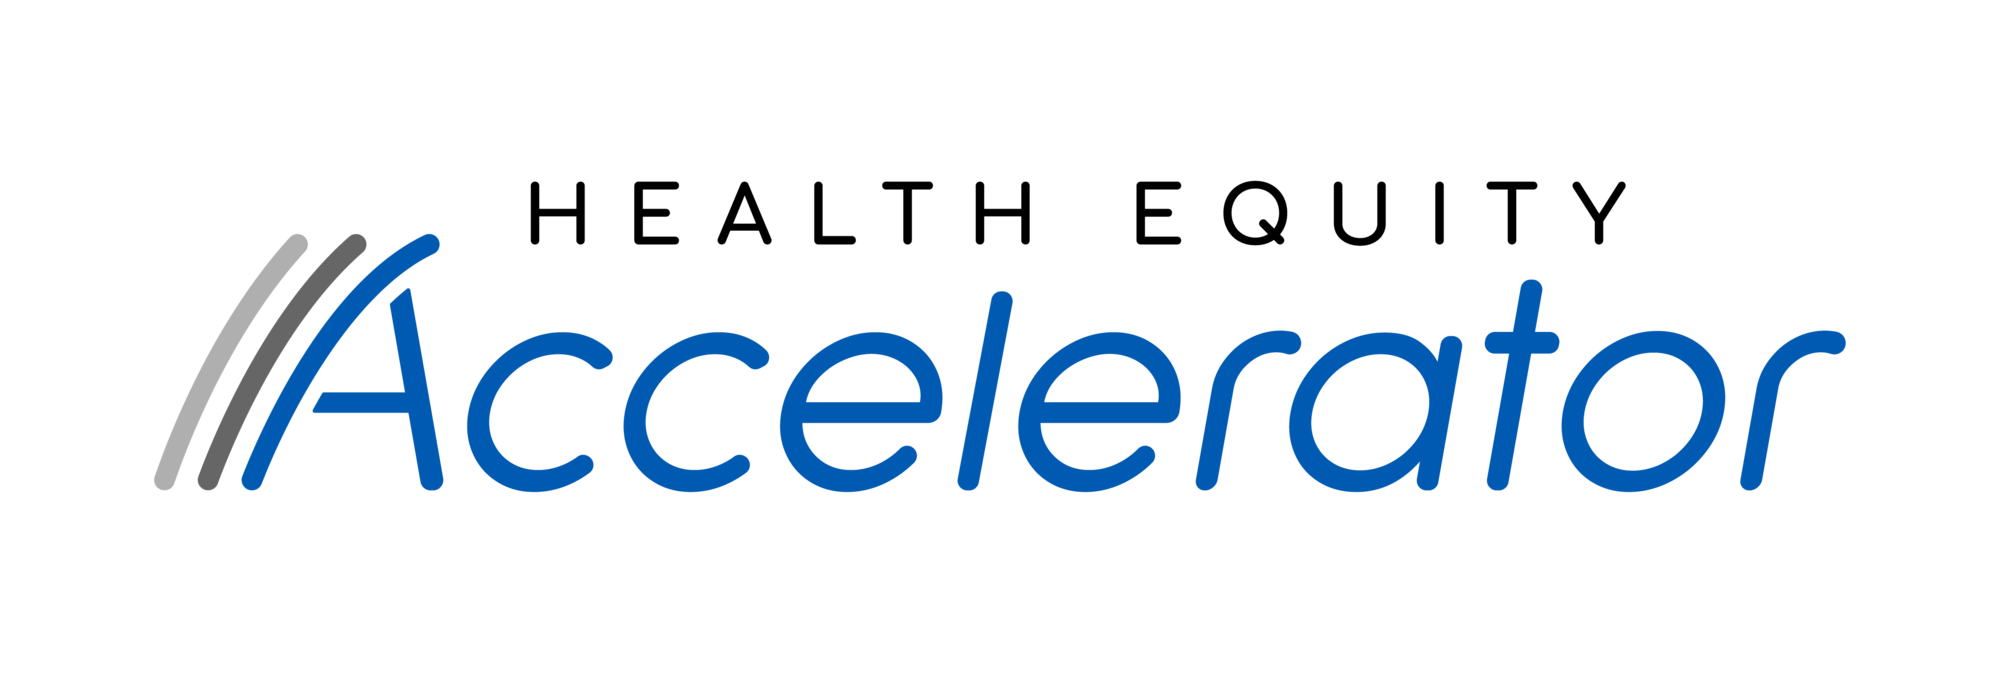 Health Equity Accelerator Logo